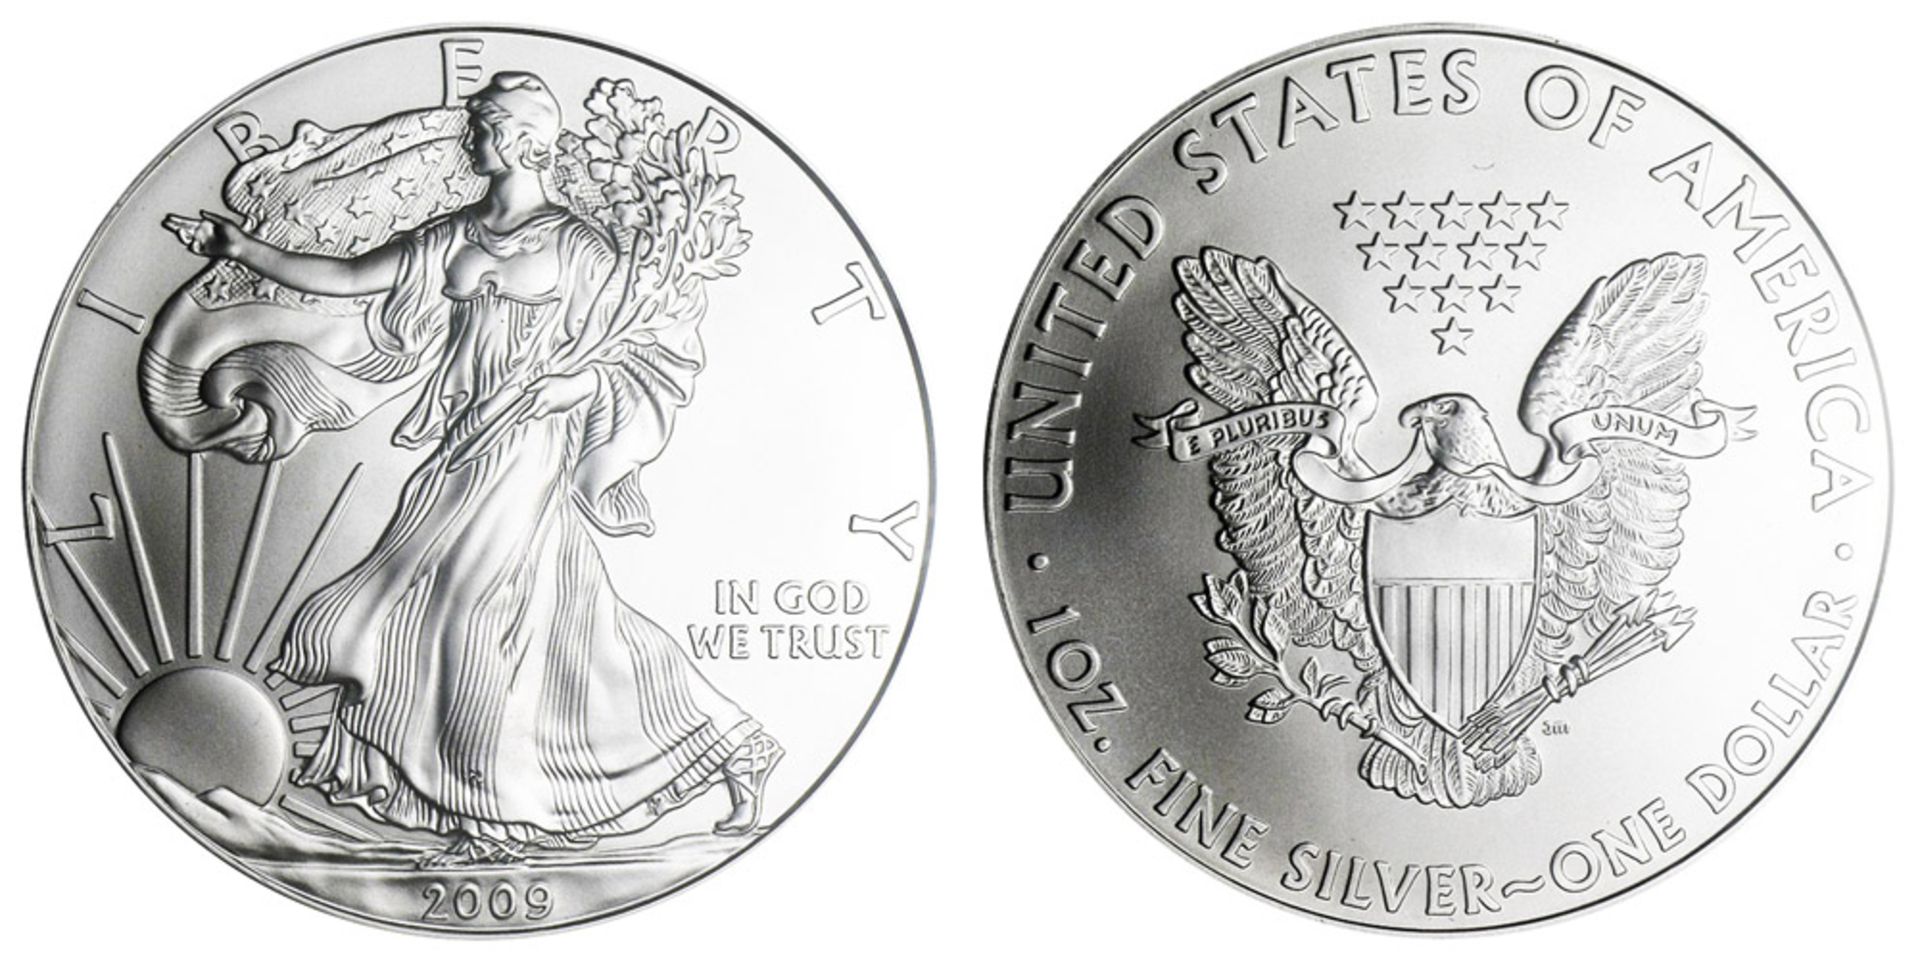 2009 American Silver Eagle .999 Fine Silver Dollar Coin - Image 2 of 2